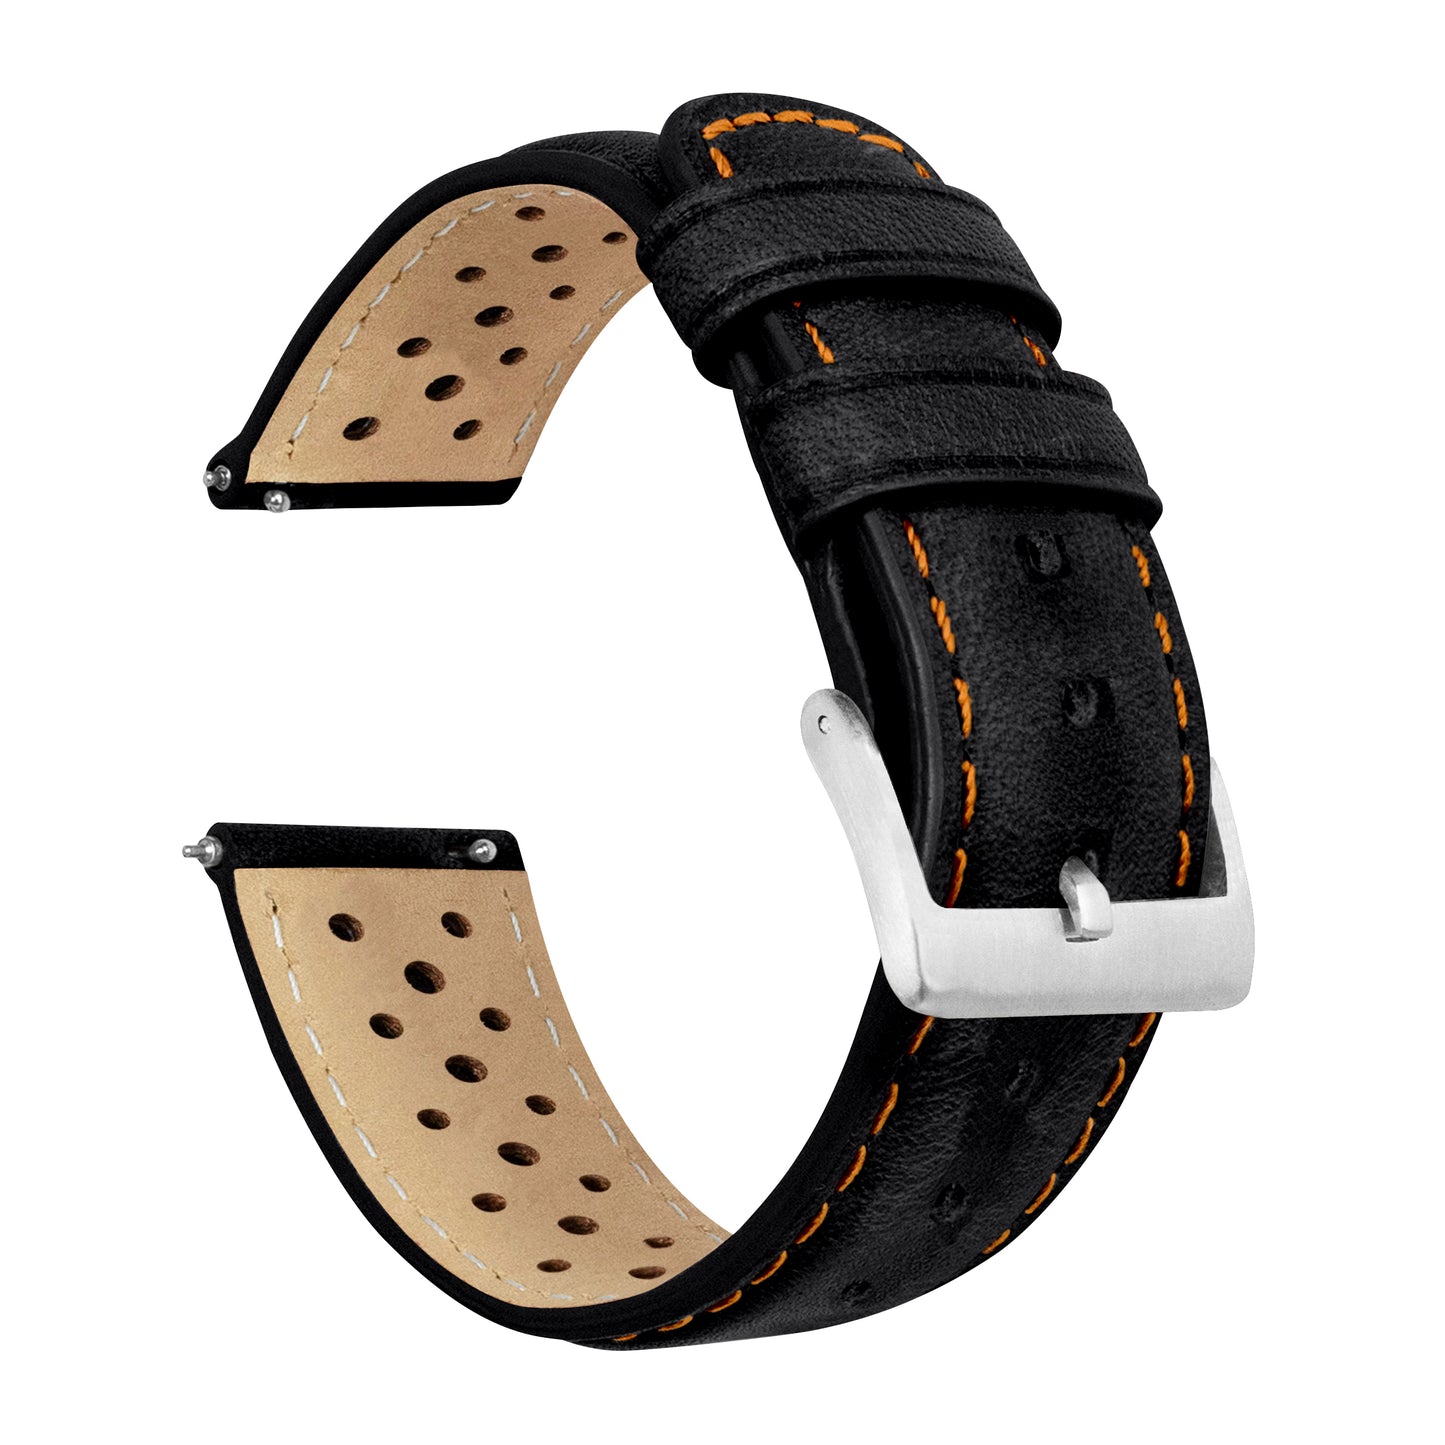 Huwawei Watch Racing Horween Leather Black Orange Stitch Watch Band